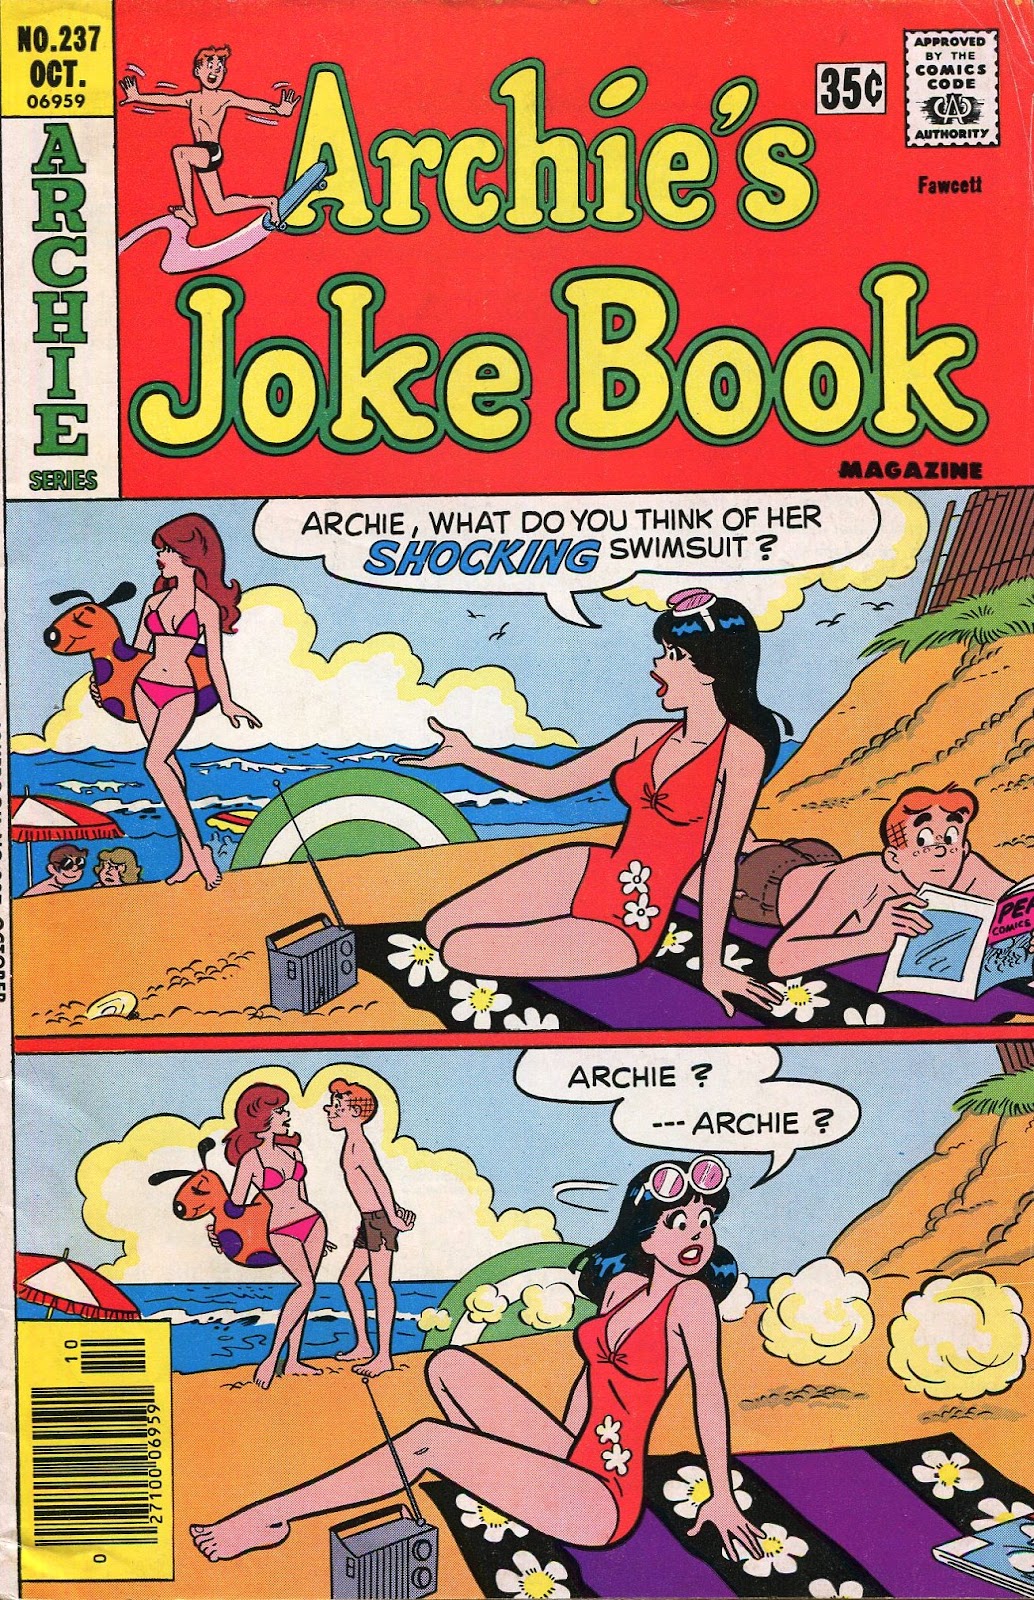 Archie's Joke Book Magazine issue 237 - Page 1